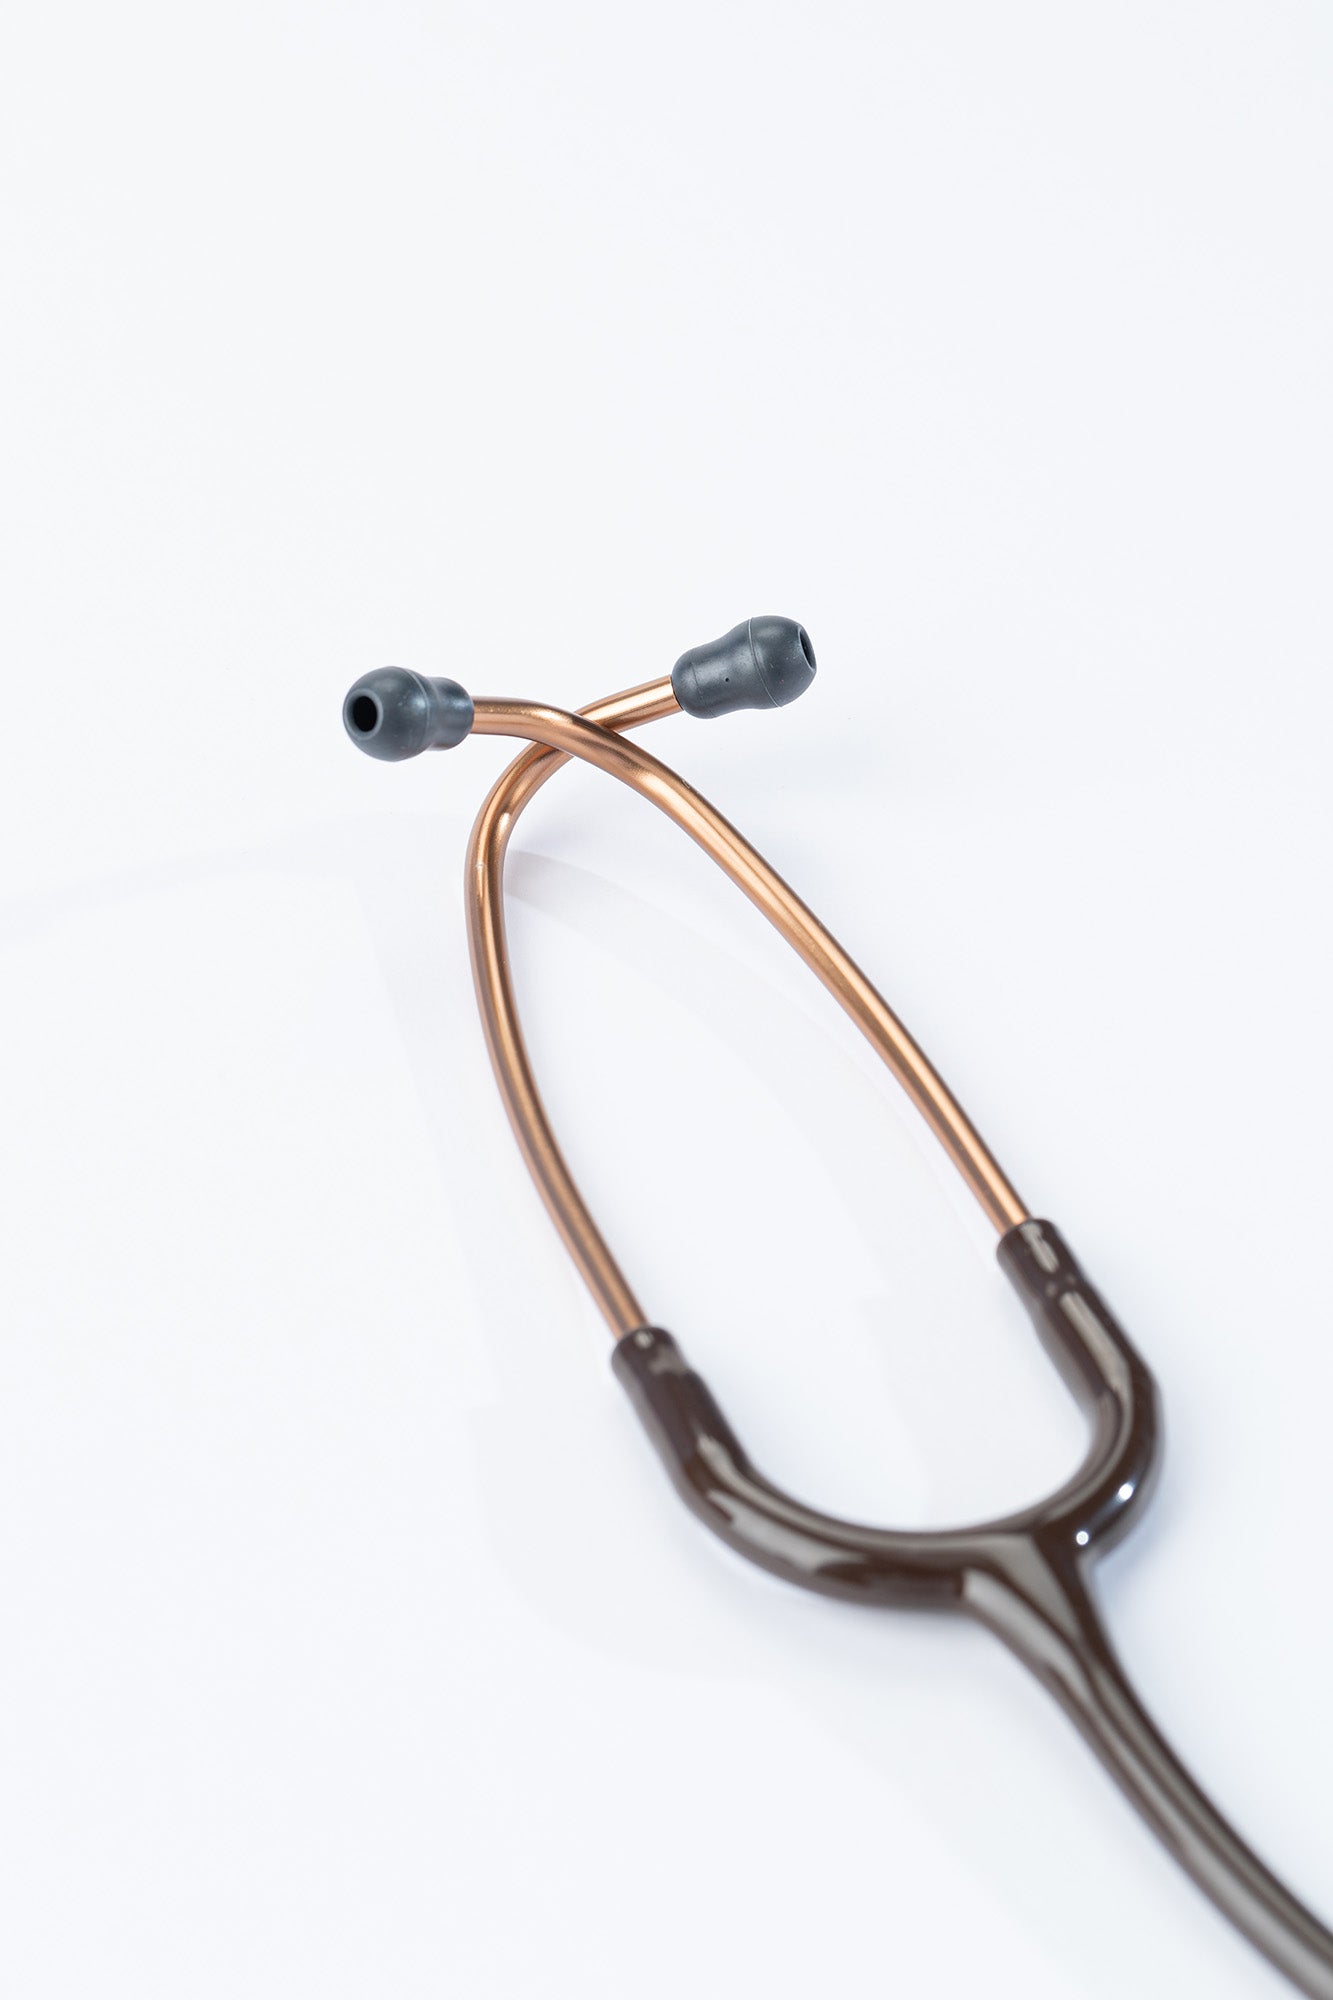 3M™ Littmann® Classic III™ Stethoscope, Copper-Finish Chestpiece, Chocolate Tube, 27 inch, 5809